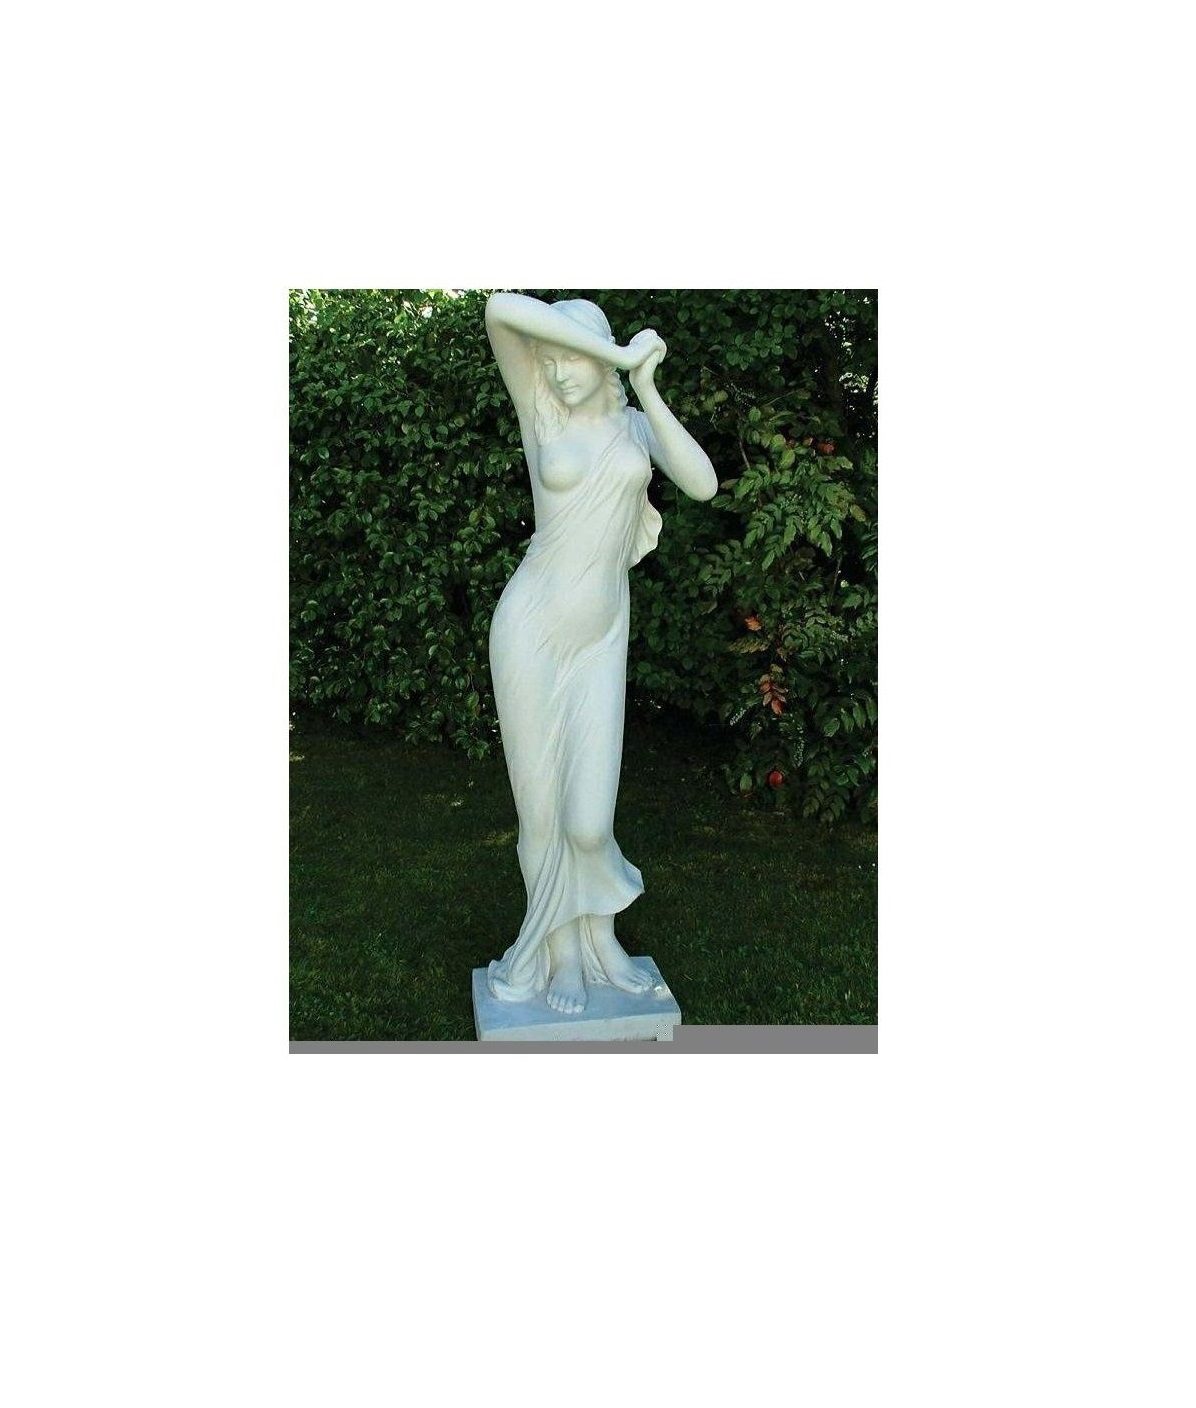 Vergogna Phryne 155Cm Marble Statue Garden Ornament 46Fea930502463634Cccc437769Deada Original